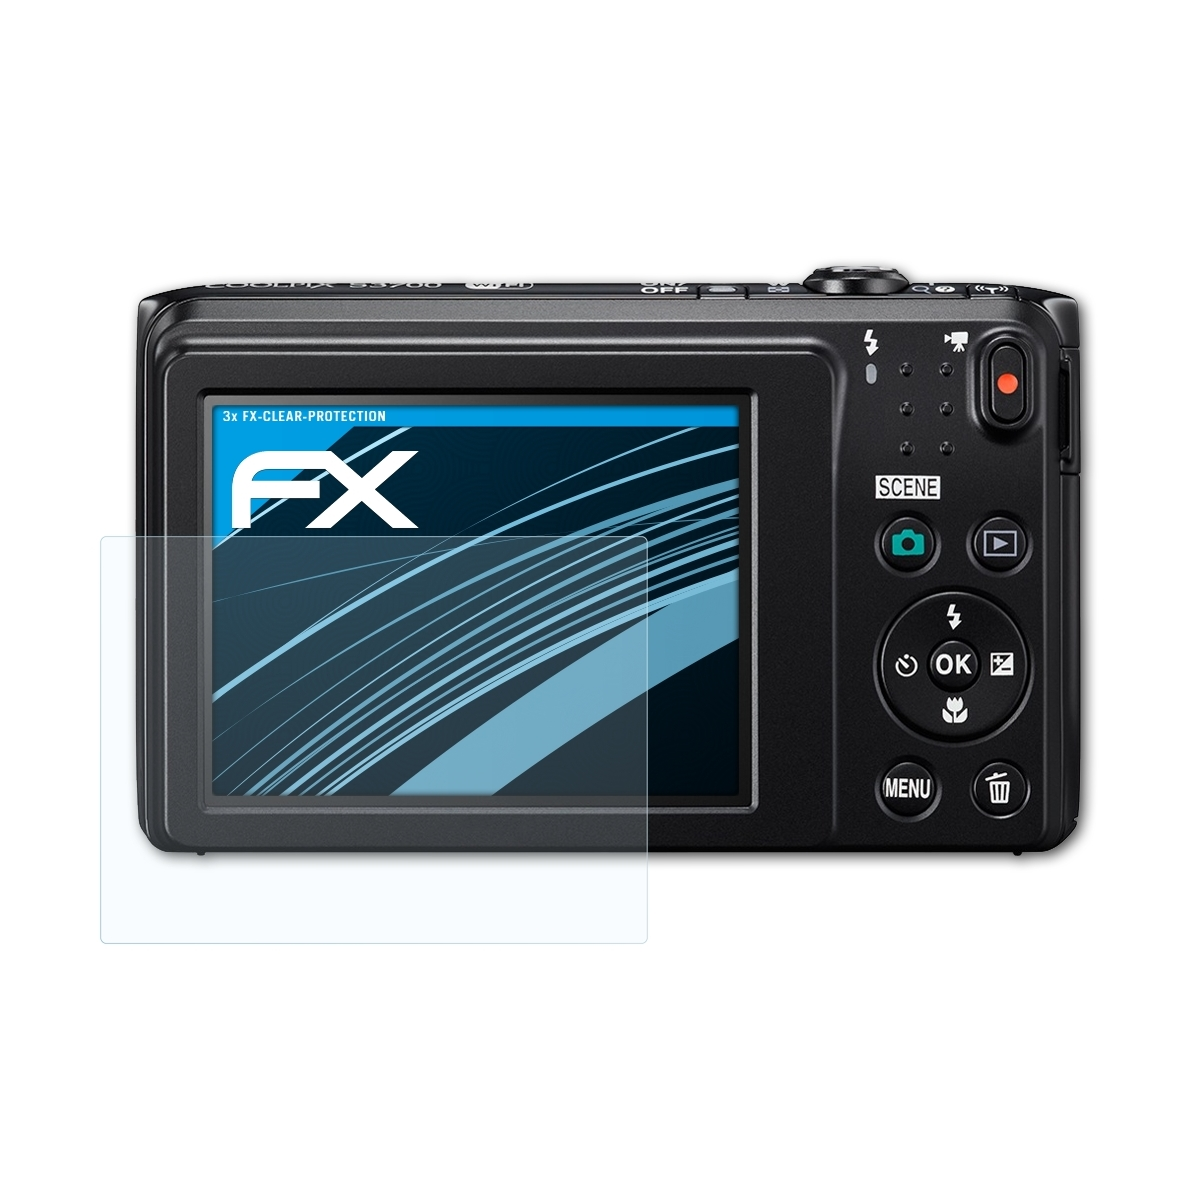 S3700) ATFOLIX Nikon FX-Clear Displayschutz(für Coolpix 3x